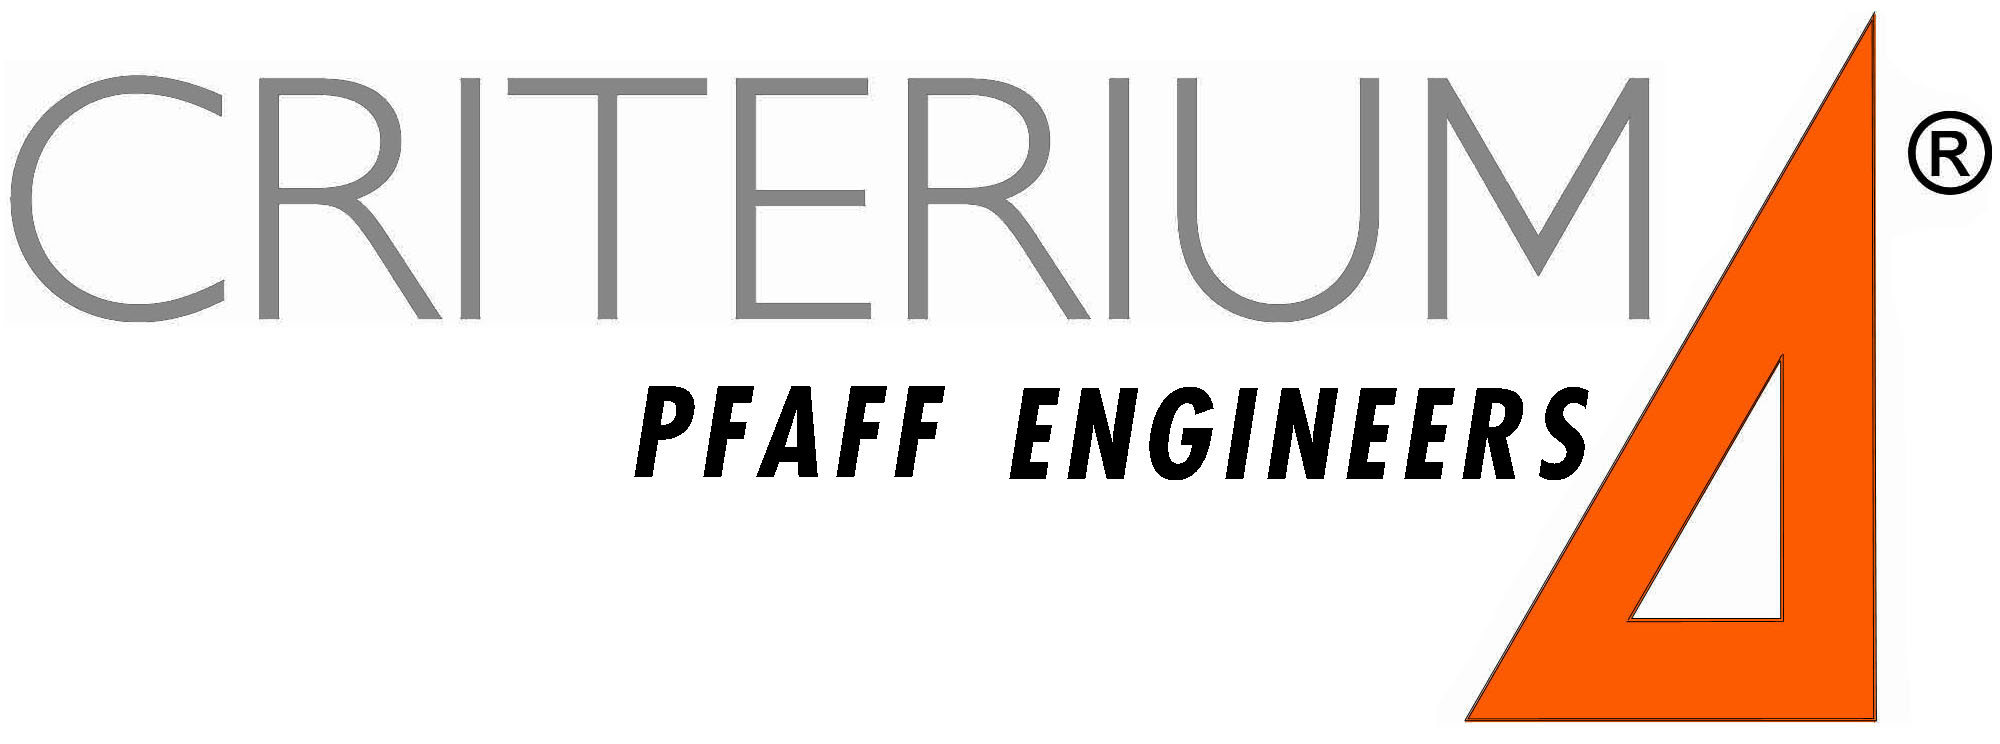 Criterium Pfaff Engineers Logo